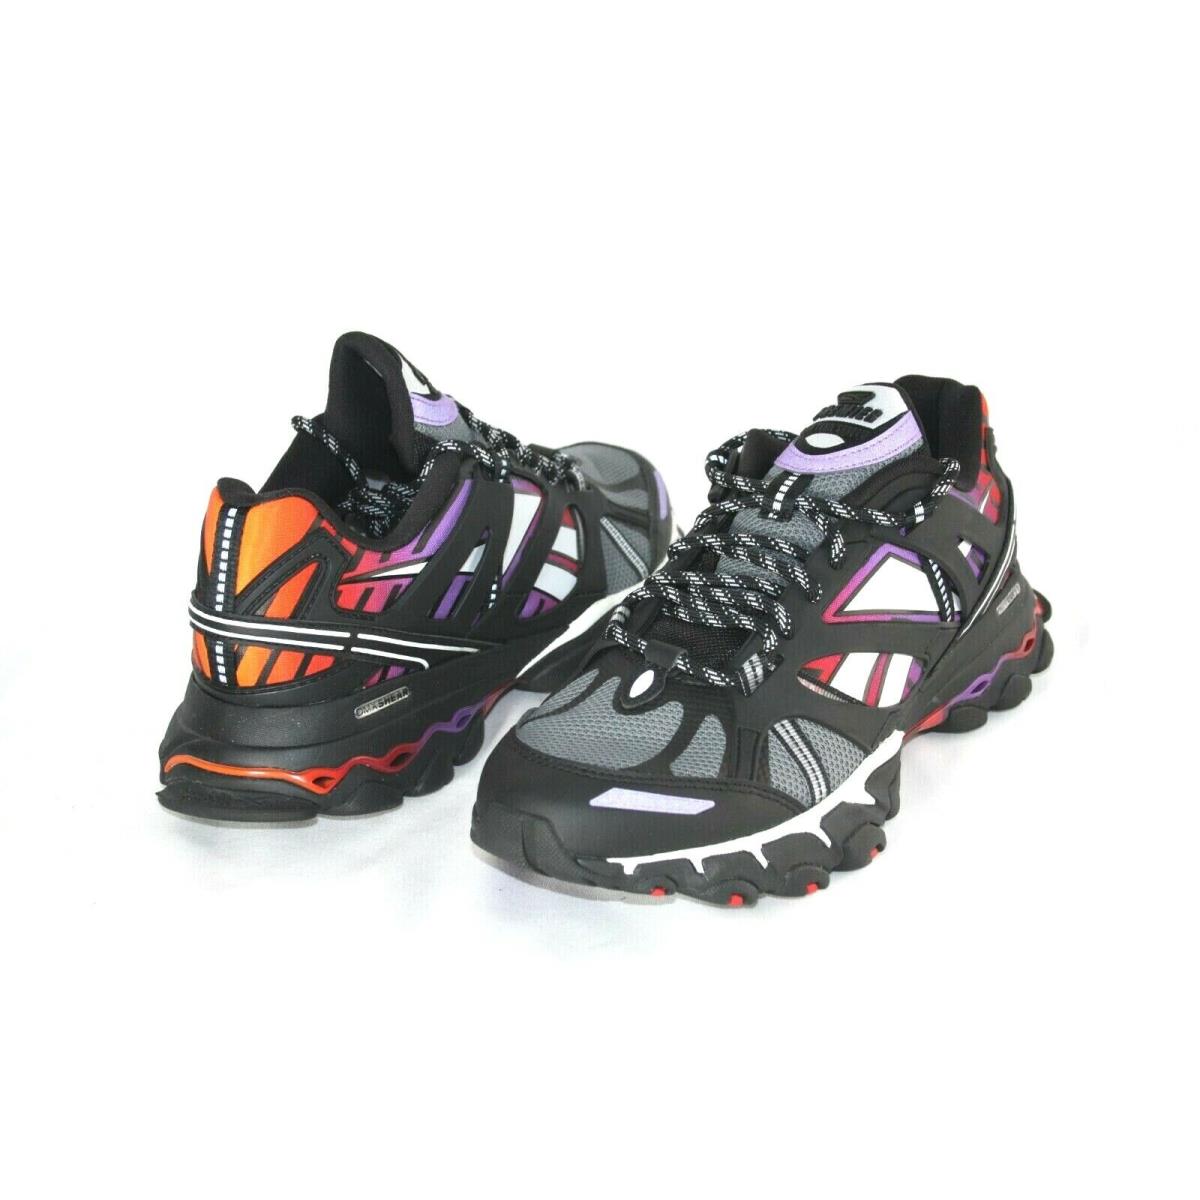 Reebok shoes DMX TRAIL SHADOW - Multicolor 3